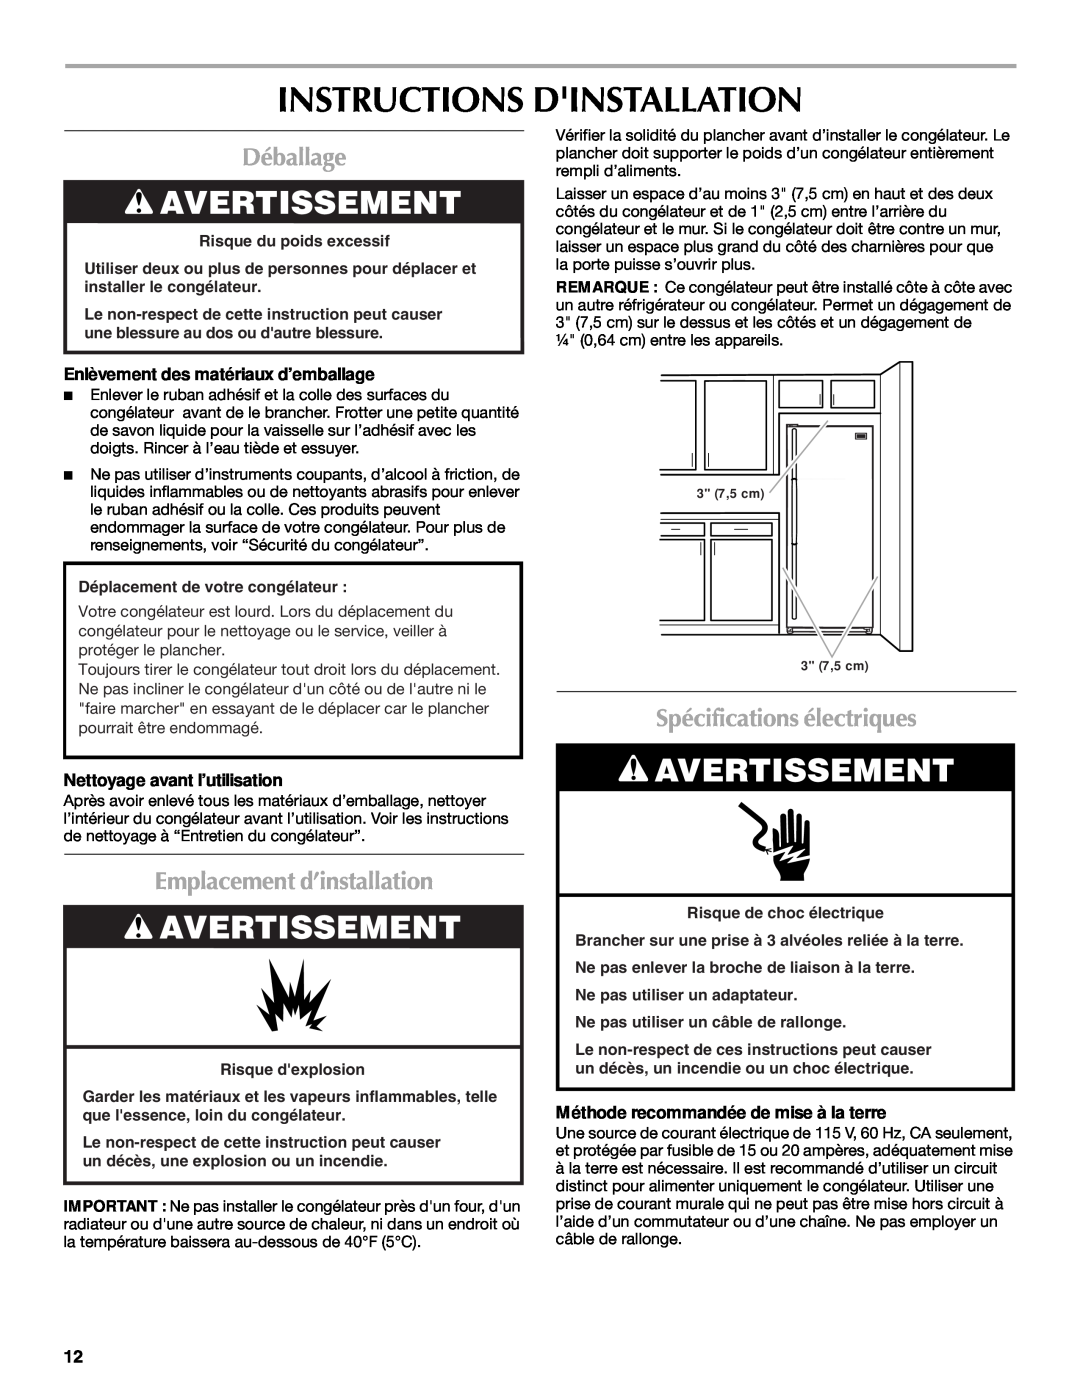 Maytag 1-82180-002 manual Instructions Dinstallation, Déballage, Emplacement d’installation, Spécifications électriques 